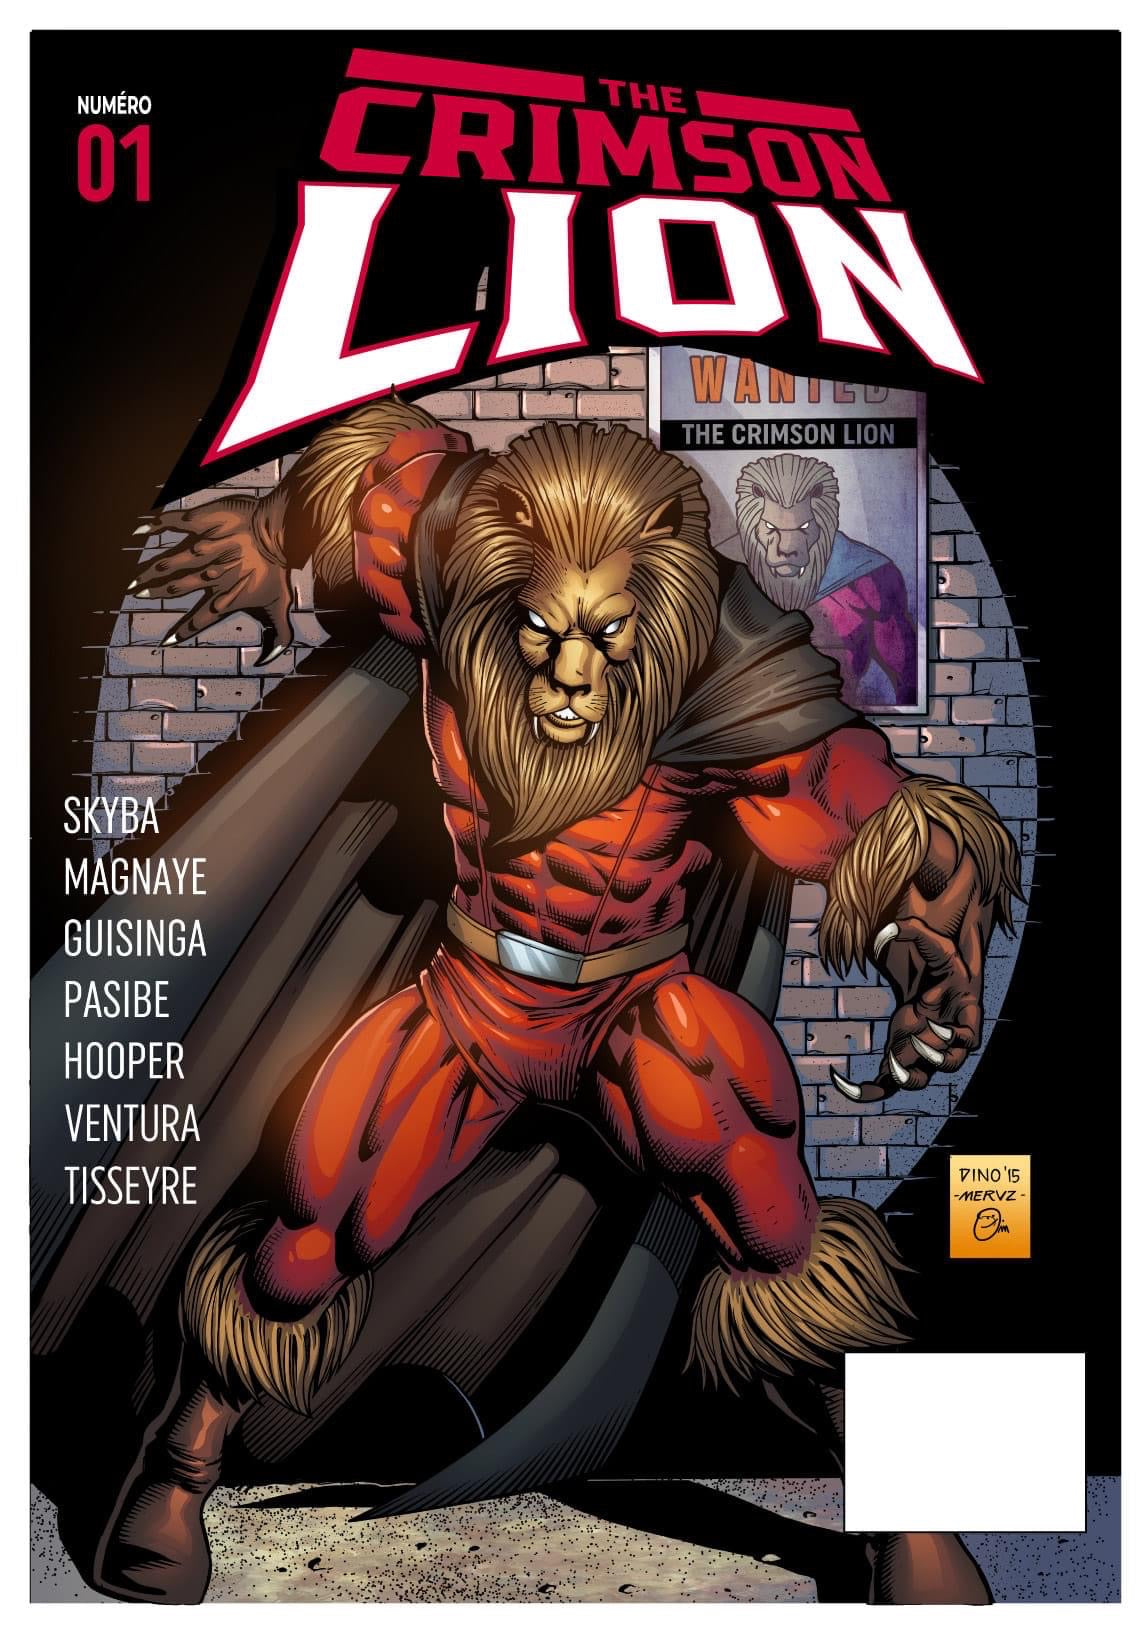 The Crimson Lion #2 by Jimbo Salgado